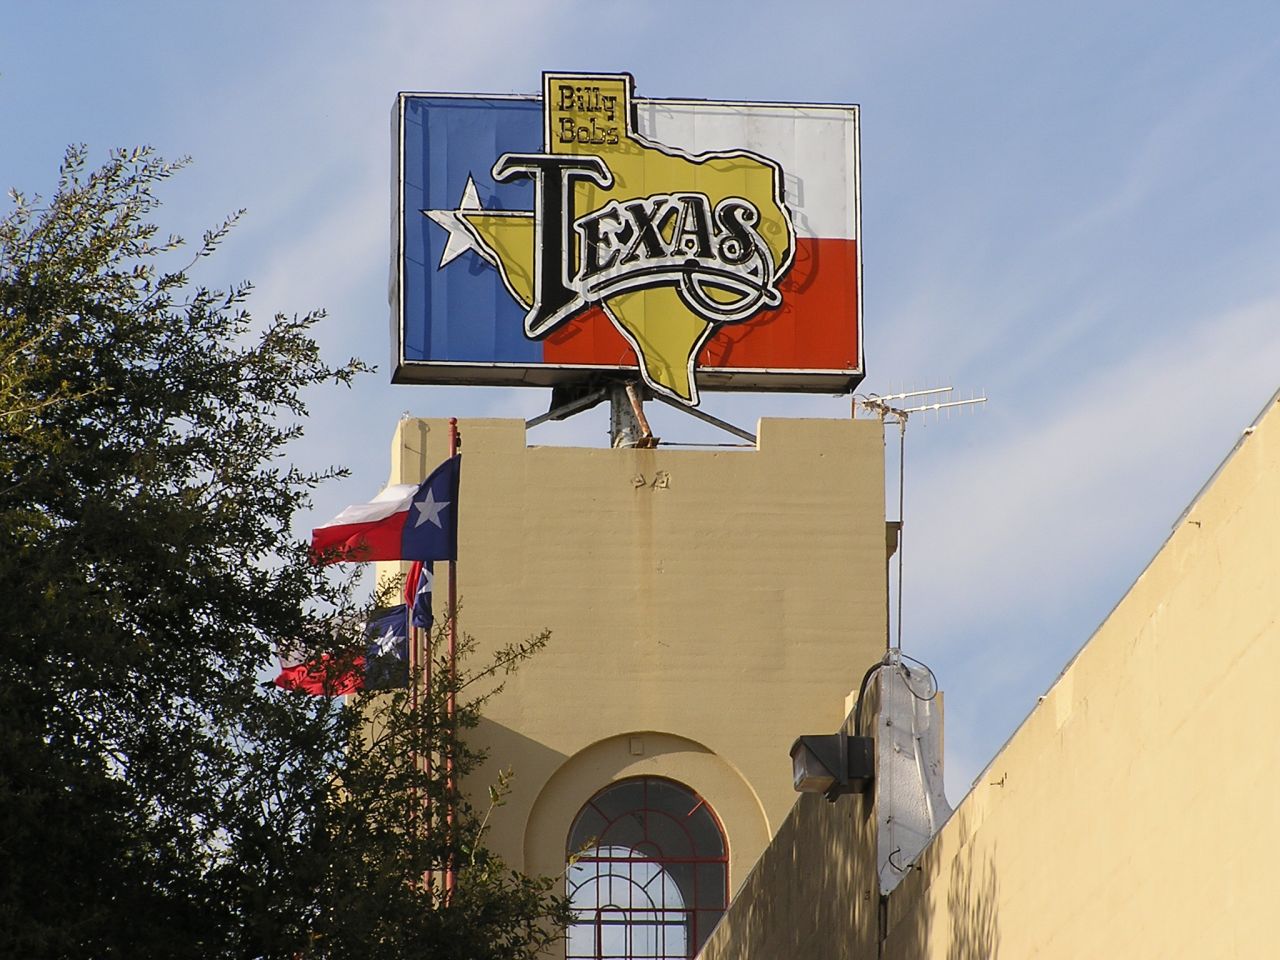 The biggest honky-tonk in Texas.